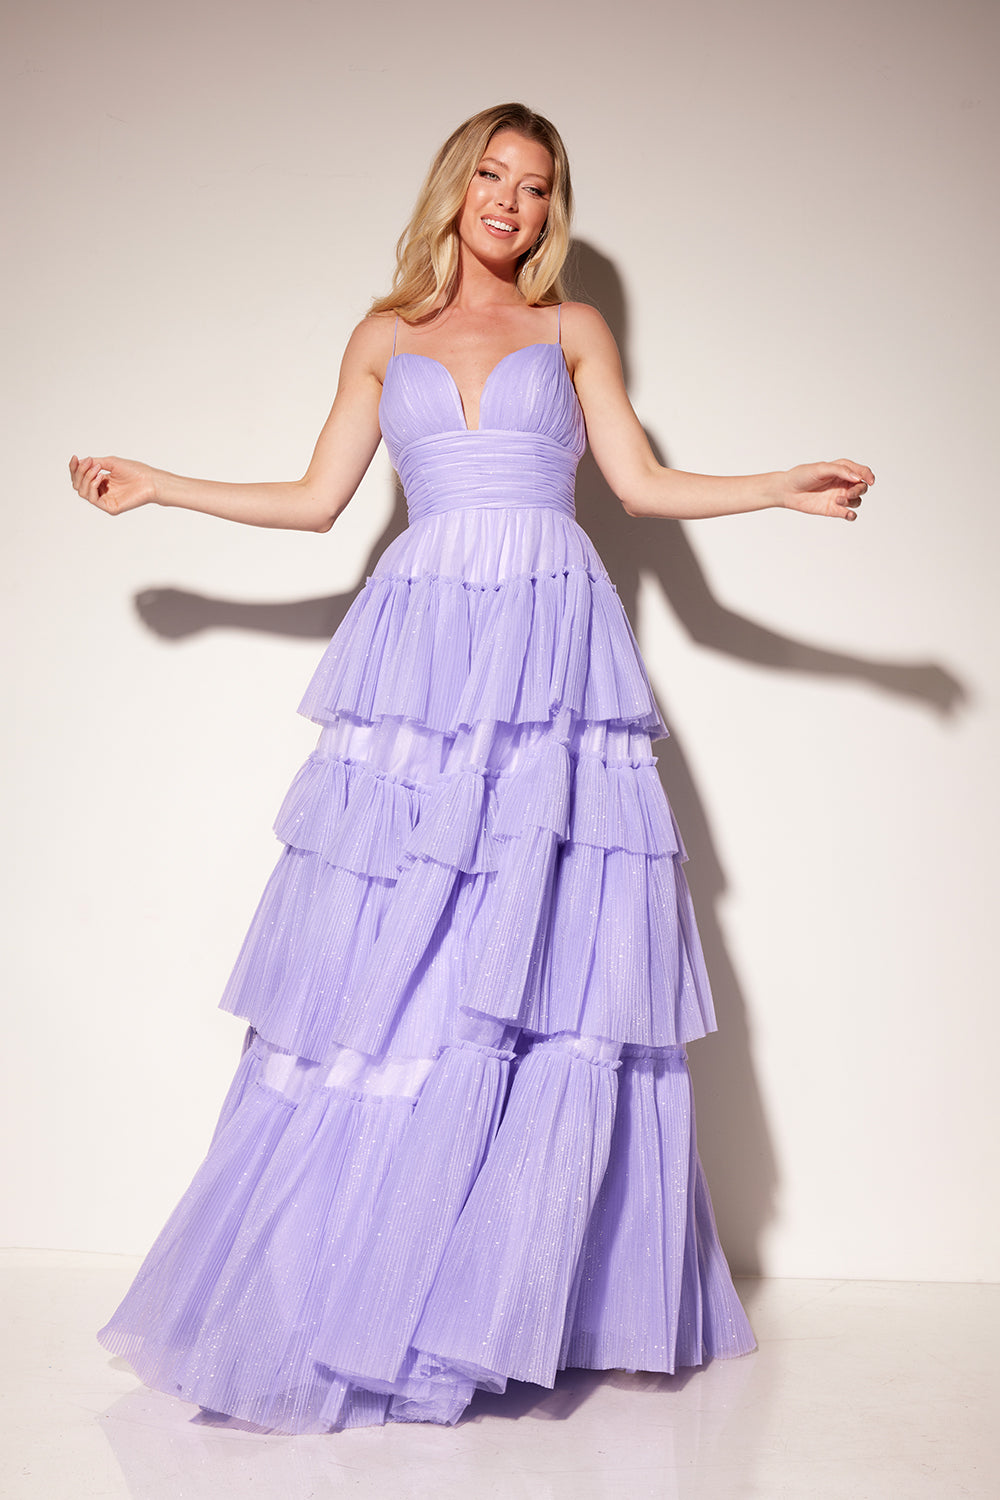 Lucci-Lu-1357-V-Neck-Neckline-V-Shaped-Back-Sweep-Train-Tulle-A-Line-Lilac-Evening-Dress-B-Chic-Fashions-Prom-Dress